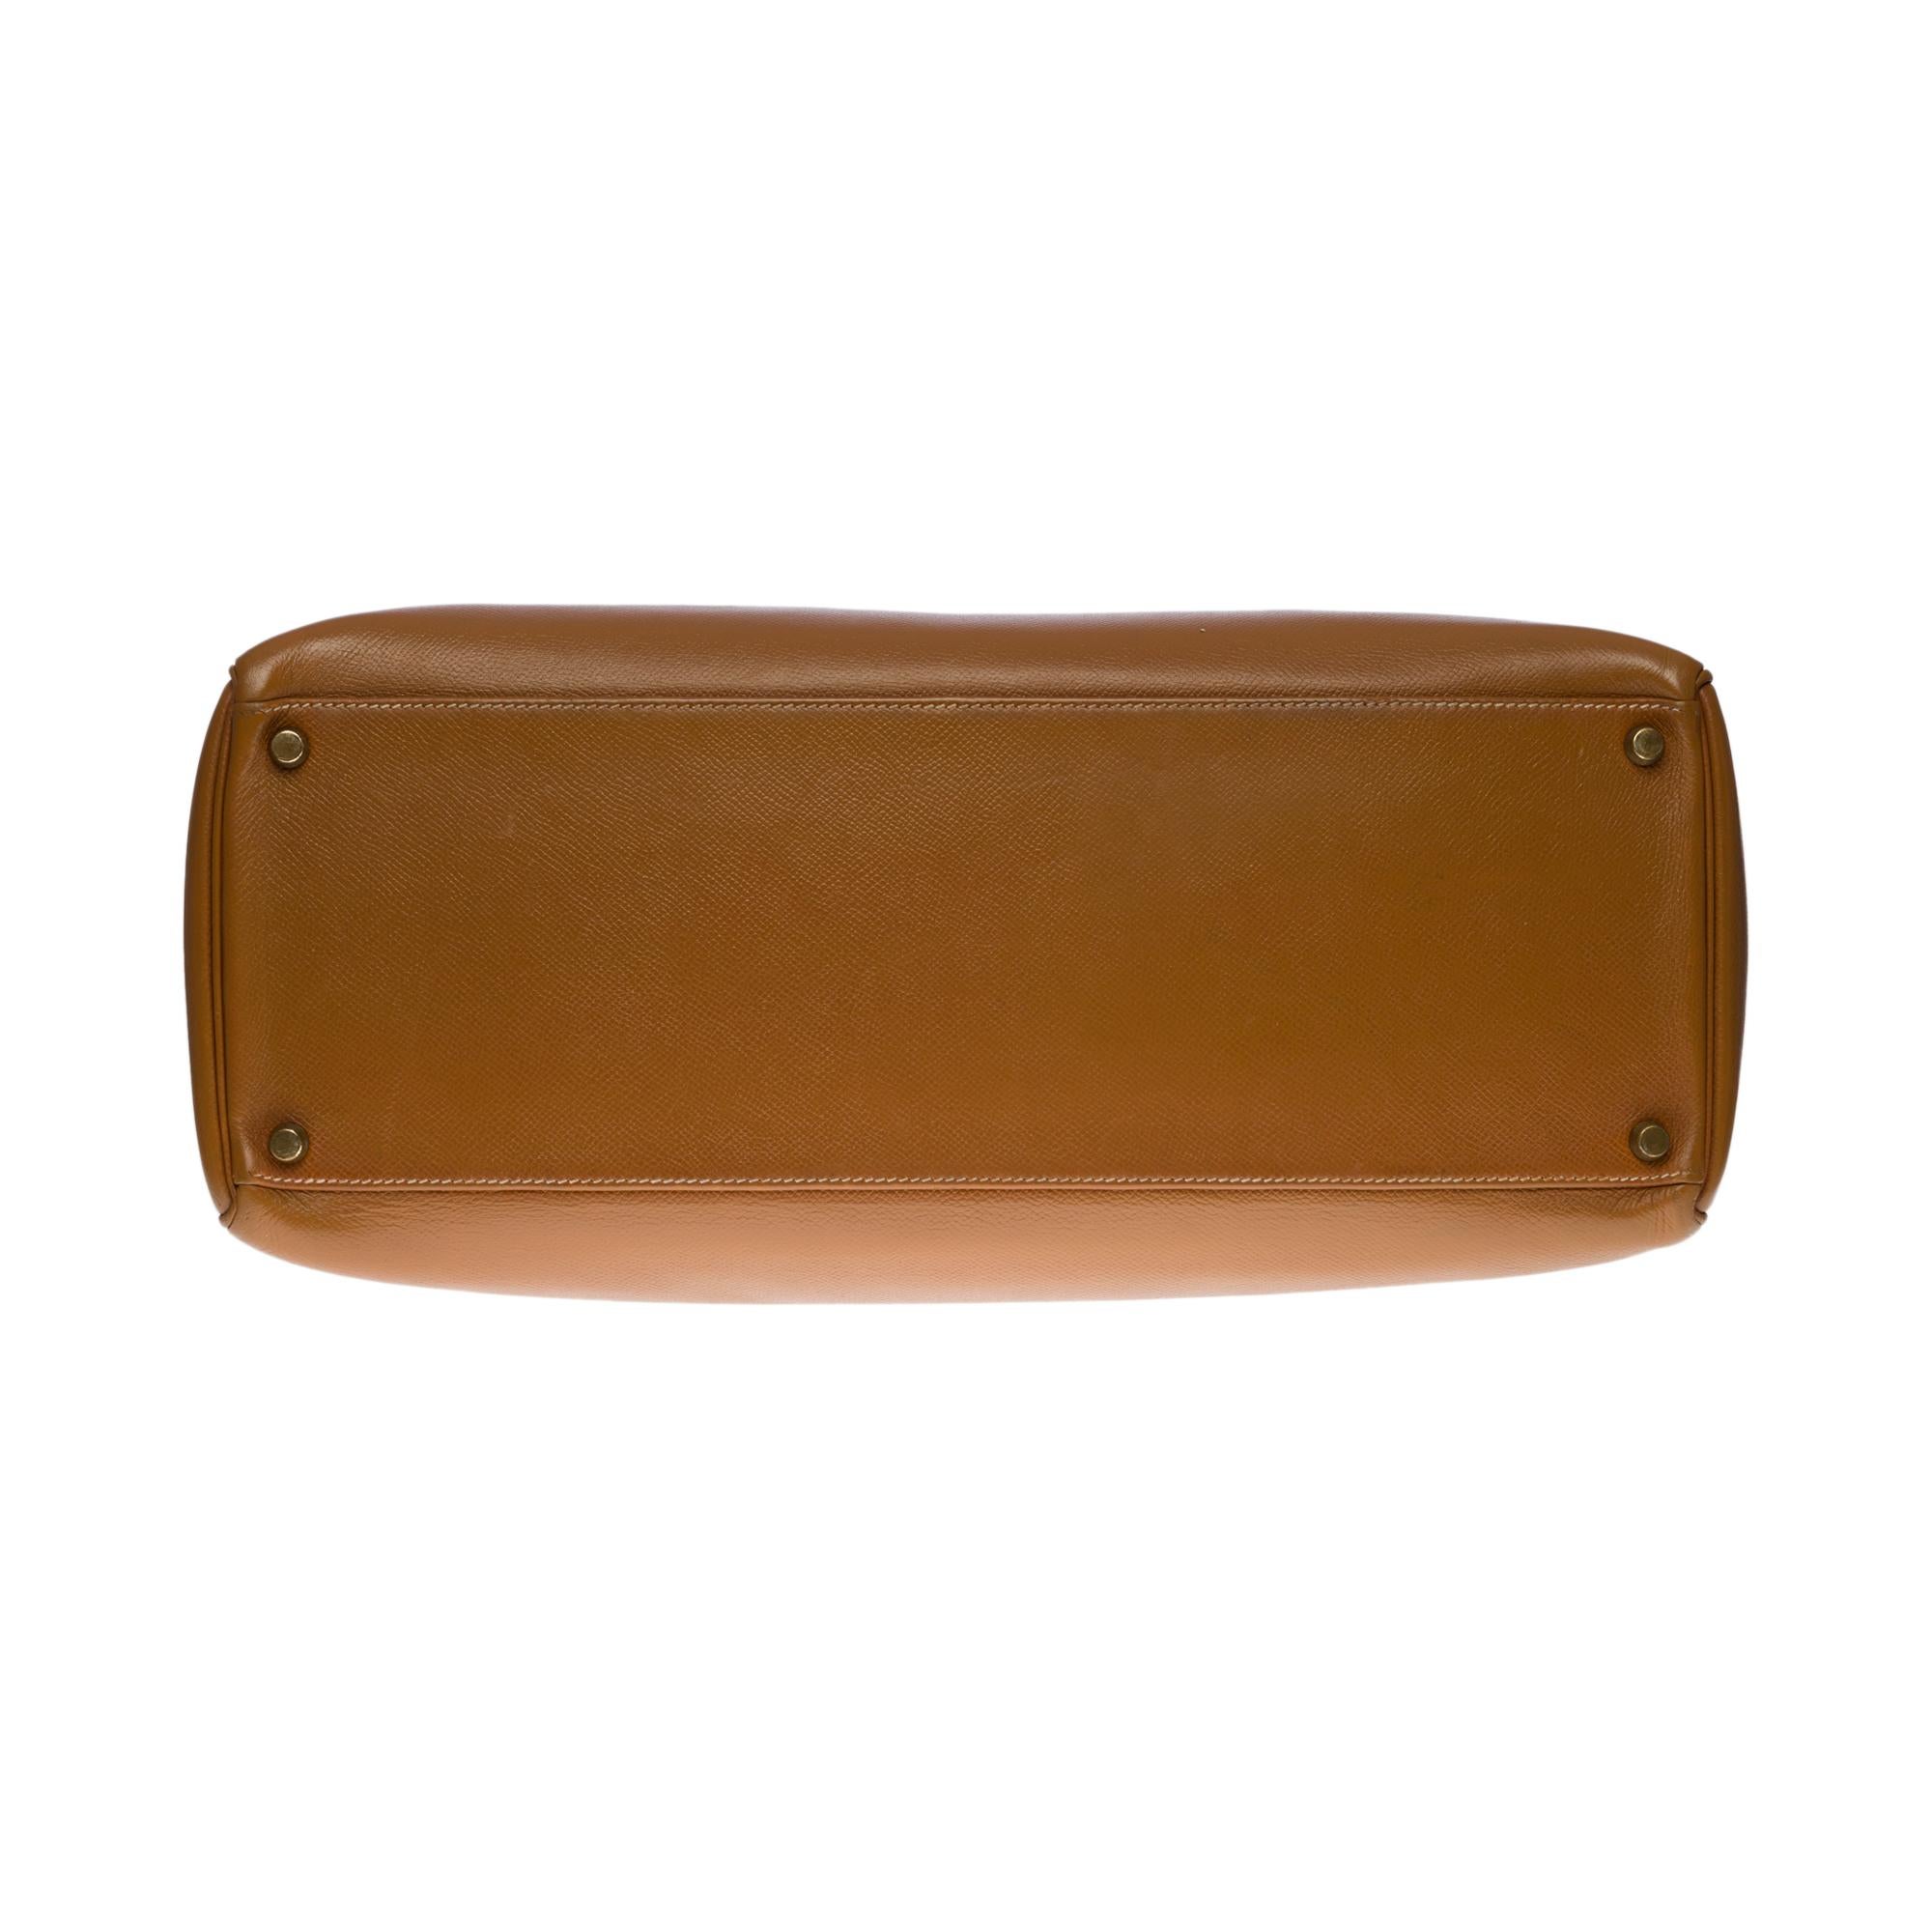 Hermes Kelly 40 retourne handbag strap in Gold Courchevel leather, GHW 4